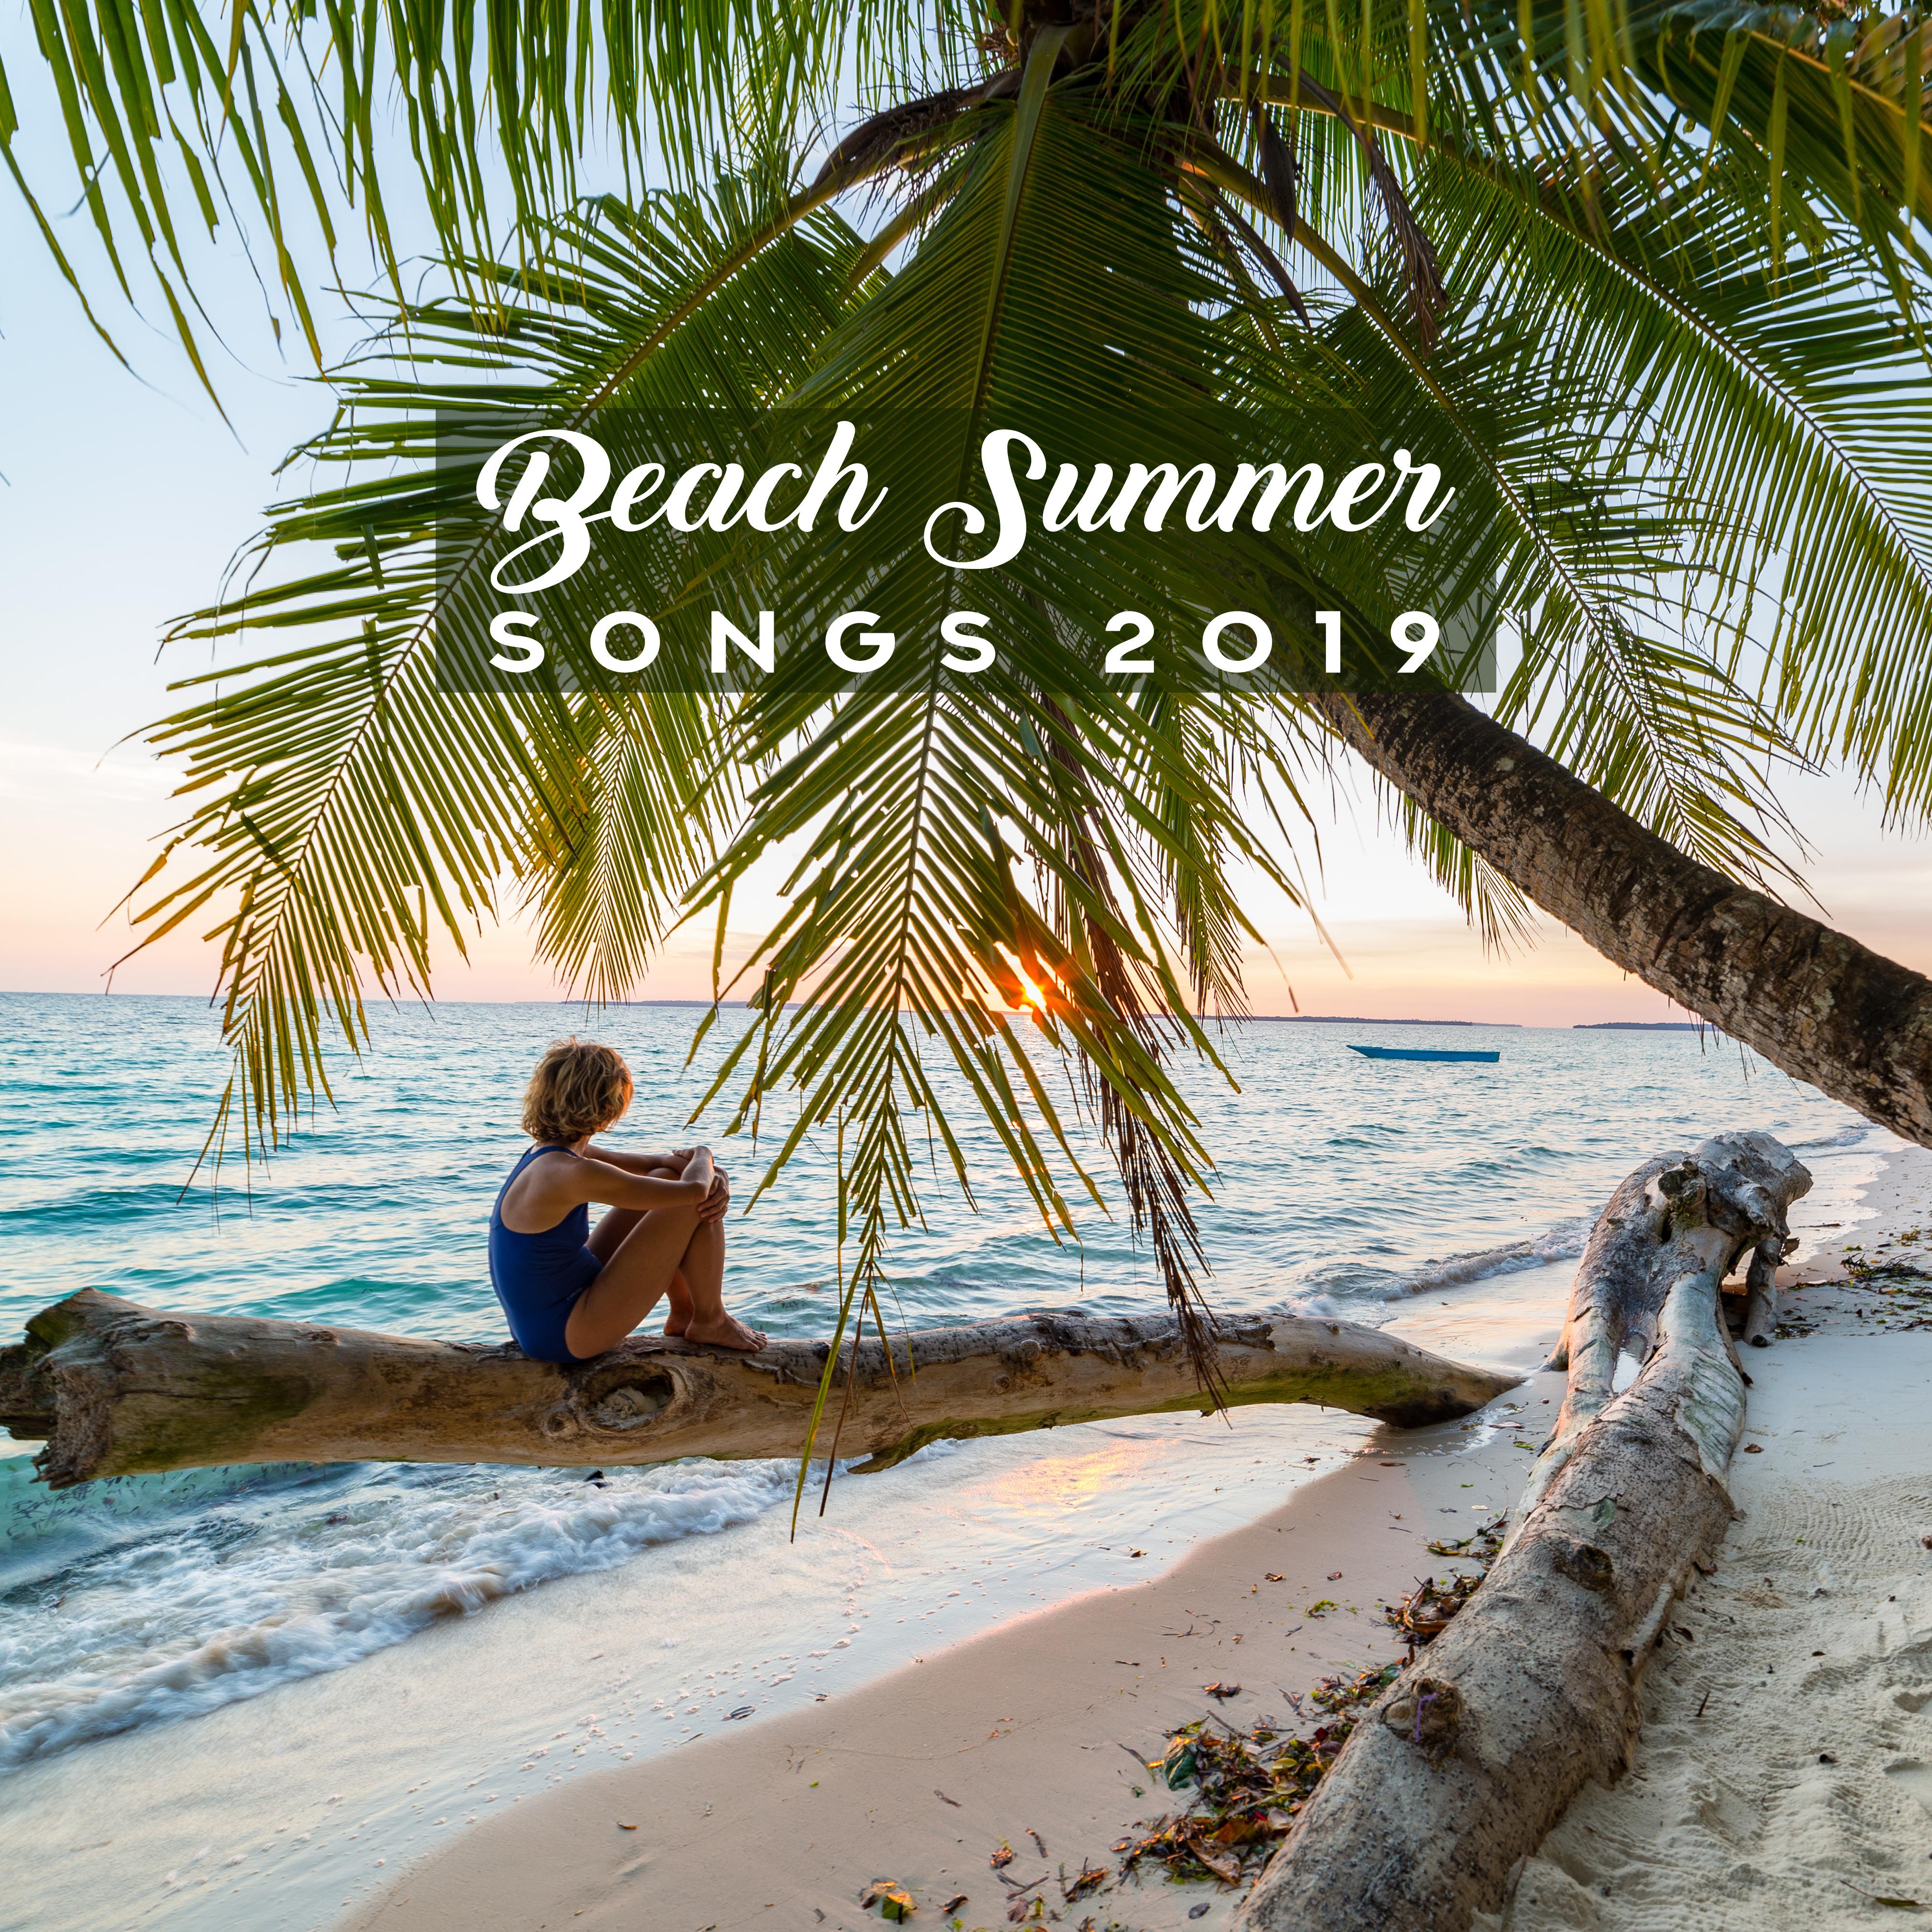 Beach Summer Songs 2019: Ibiza Chill Selection, Hot Ibiza Vibrations, Chilled Lounge Ibiza, Tropical Chill Out, Zen